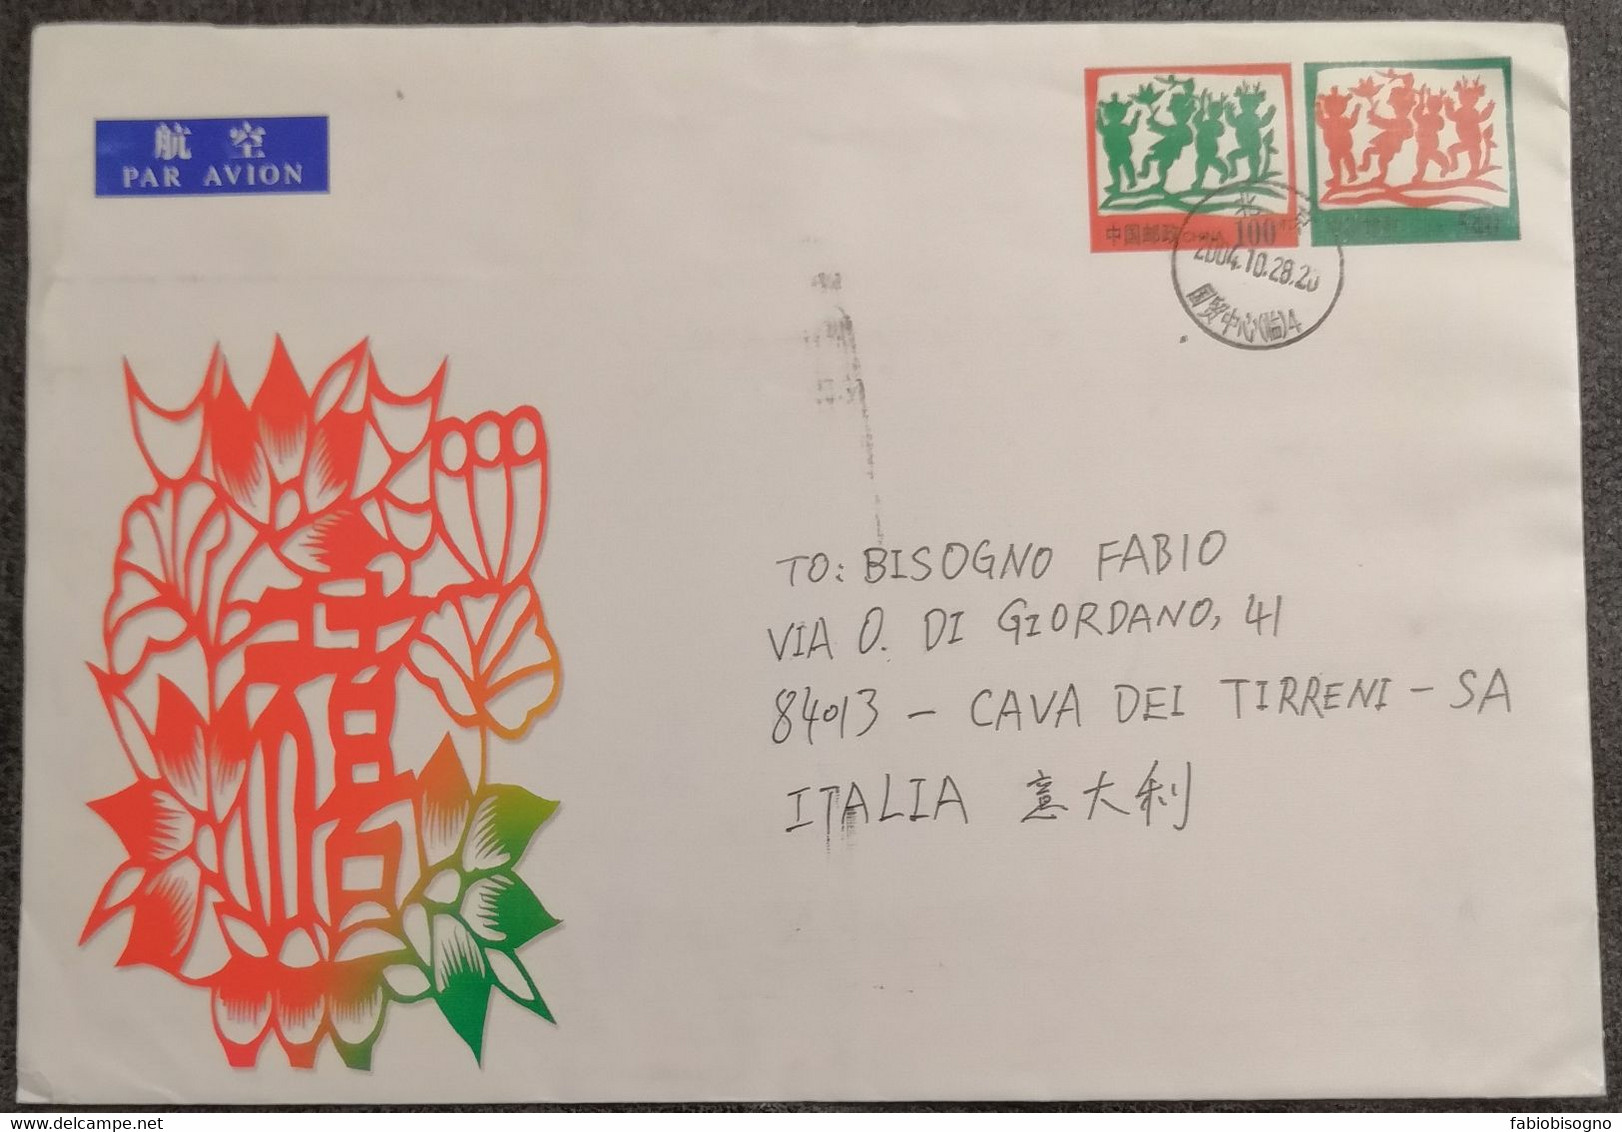 China 2004 - 540 + 100 - Air Mail Postal Cover To Italy - Aerogramme